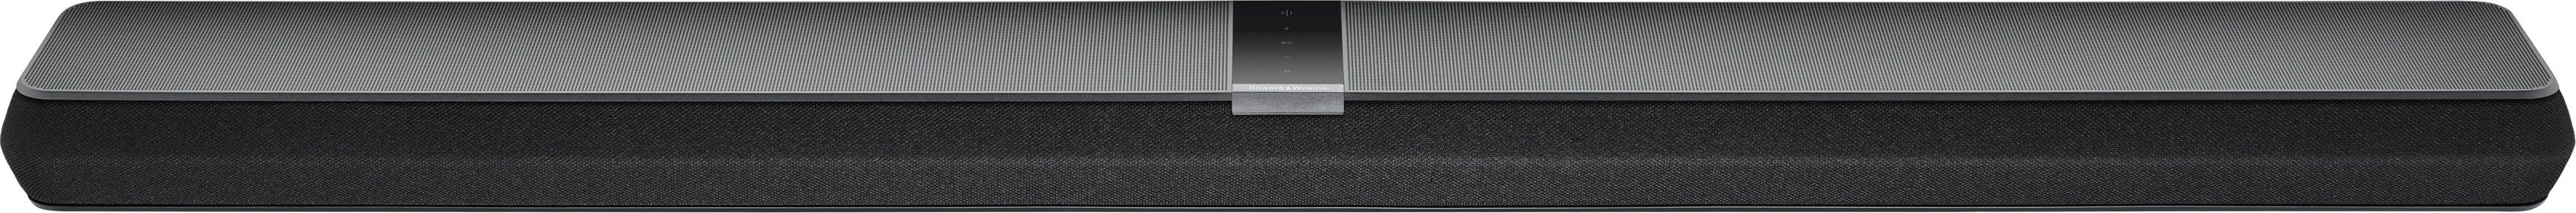 Bluetooth, Wireless & 400 Bowers Airplay Wilkins Soundbar (aptX 3.1.2 Dolby 2) 3 Atmos, W, Panorama